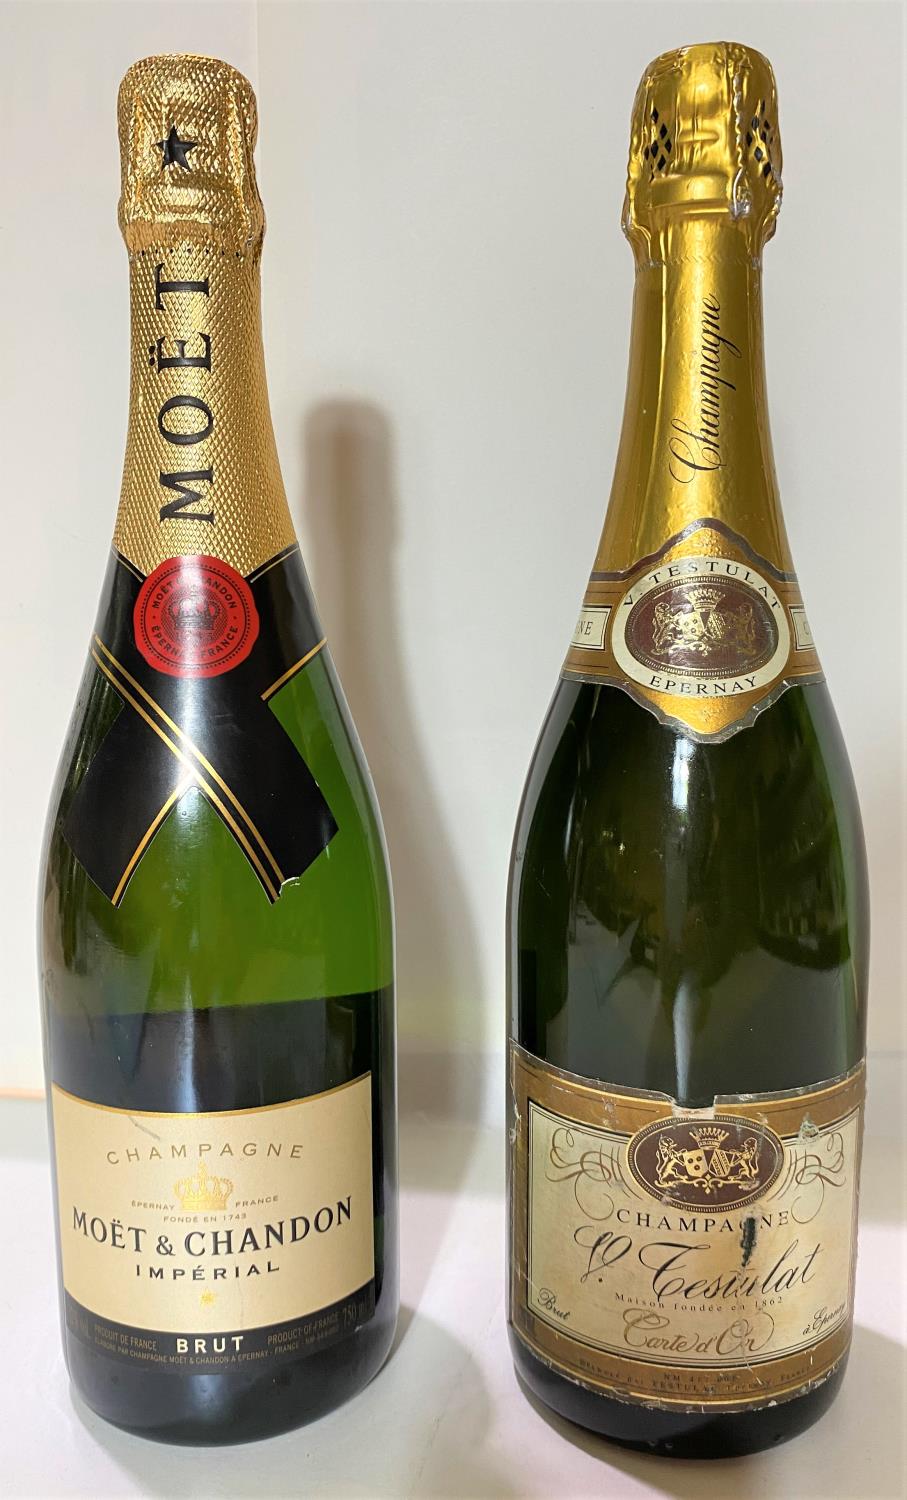 A bottle of Moet & Chandon Imperial Brut LAIXA 12% vol; s bottle of Tesulat carte d'Or Champagne